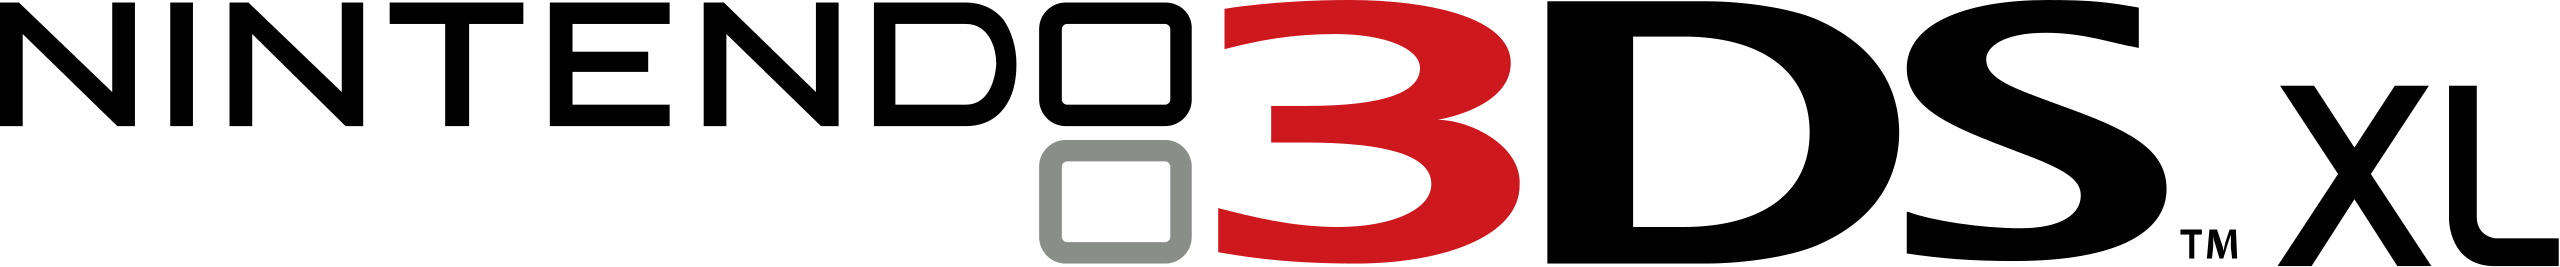 File:Nintendo 3DS XL logo.svg - Wikimedia Commons